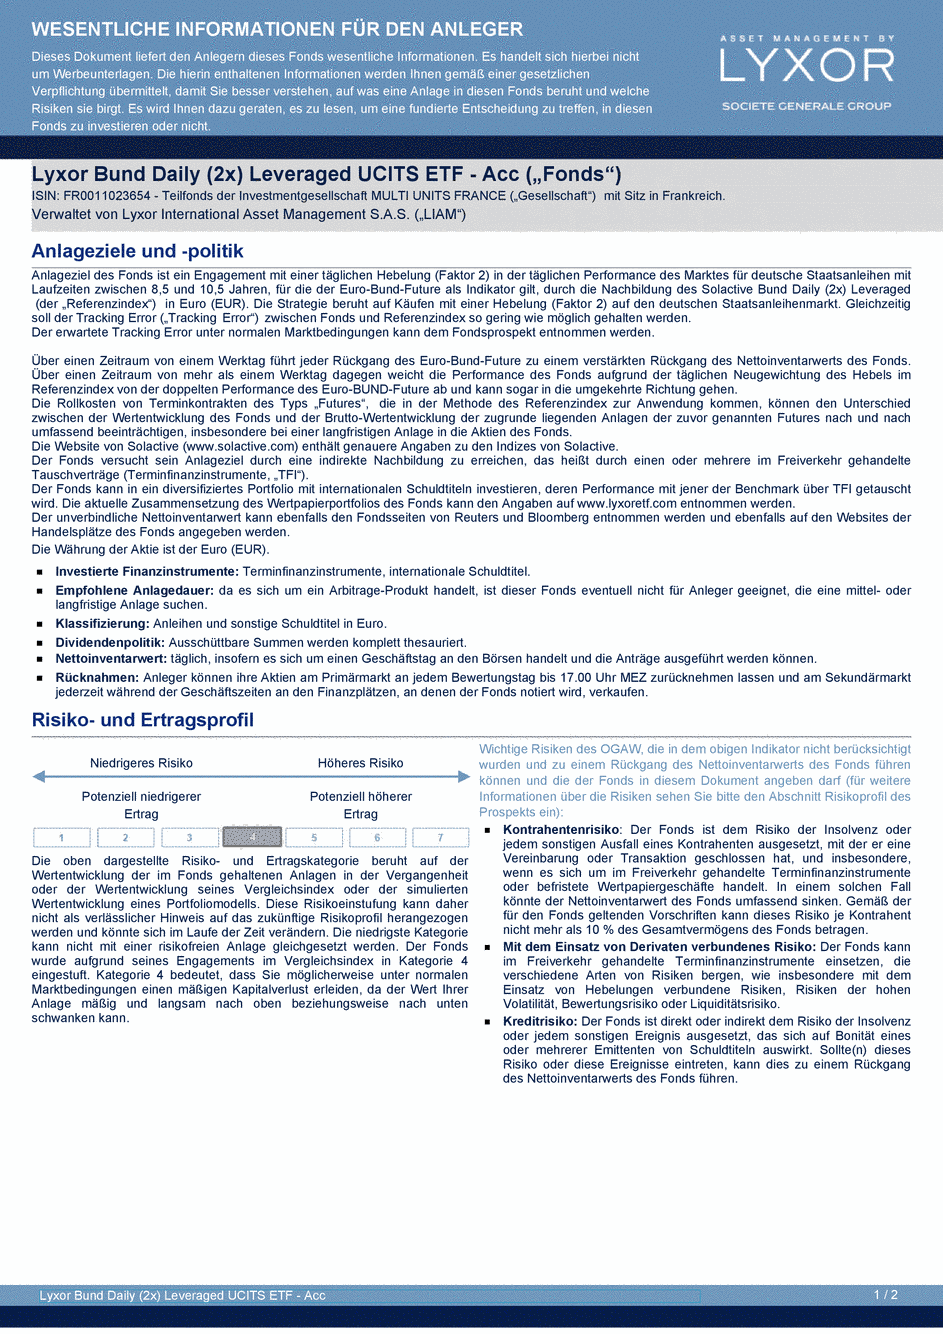 DICI Lyxor Bund Daily (2x) Leveraged UCITS ETF - Acc - 21/06/2019 - Allemand